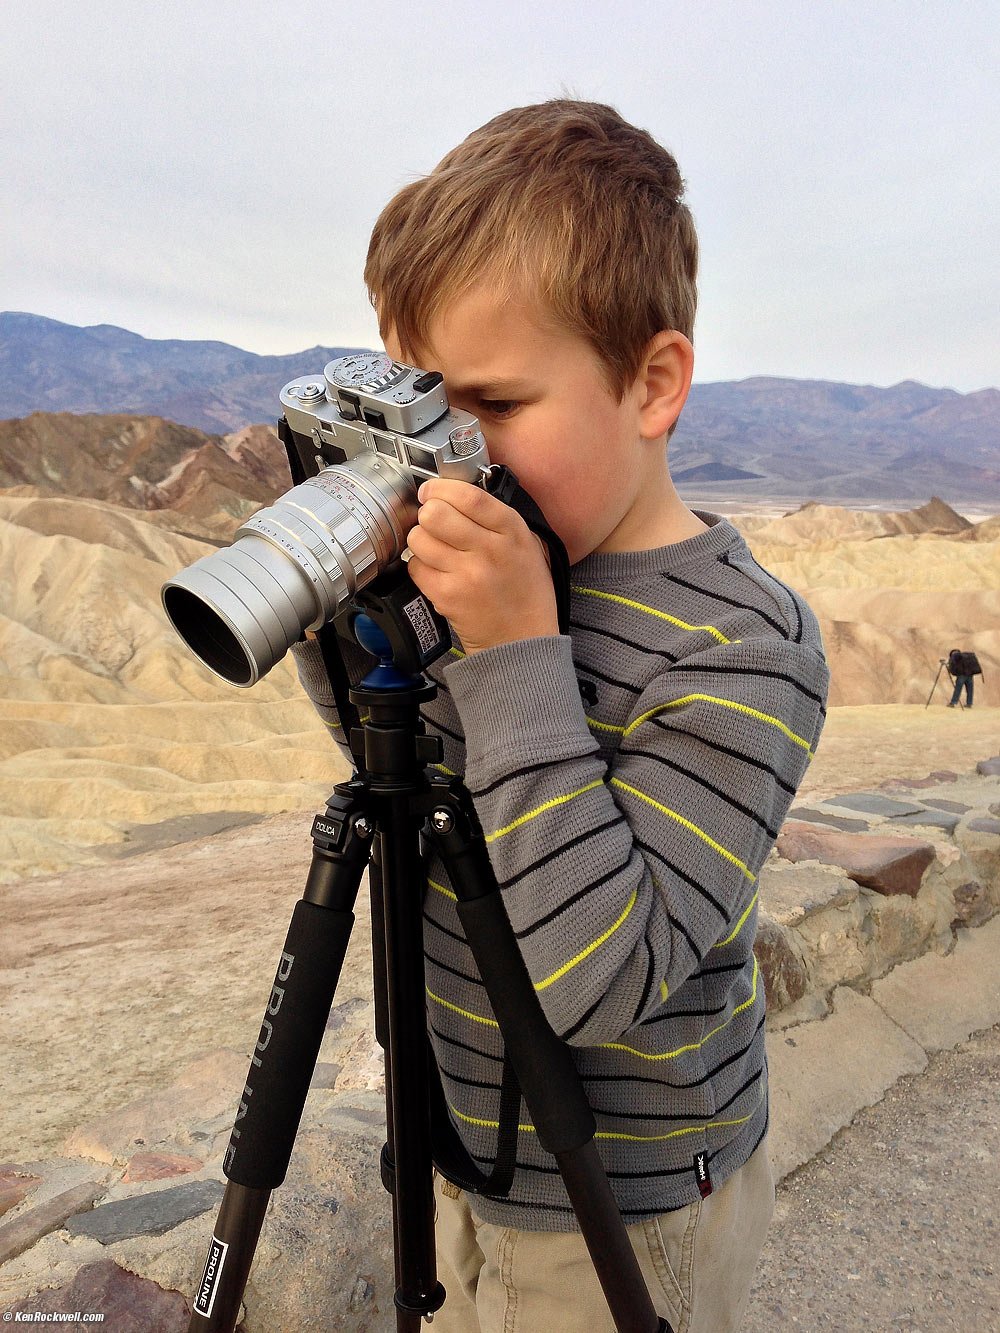 Ryan shoots the LEICA M3 at Zabriskie Point, Death Valley, California 7:31 AM.